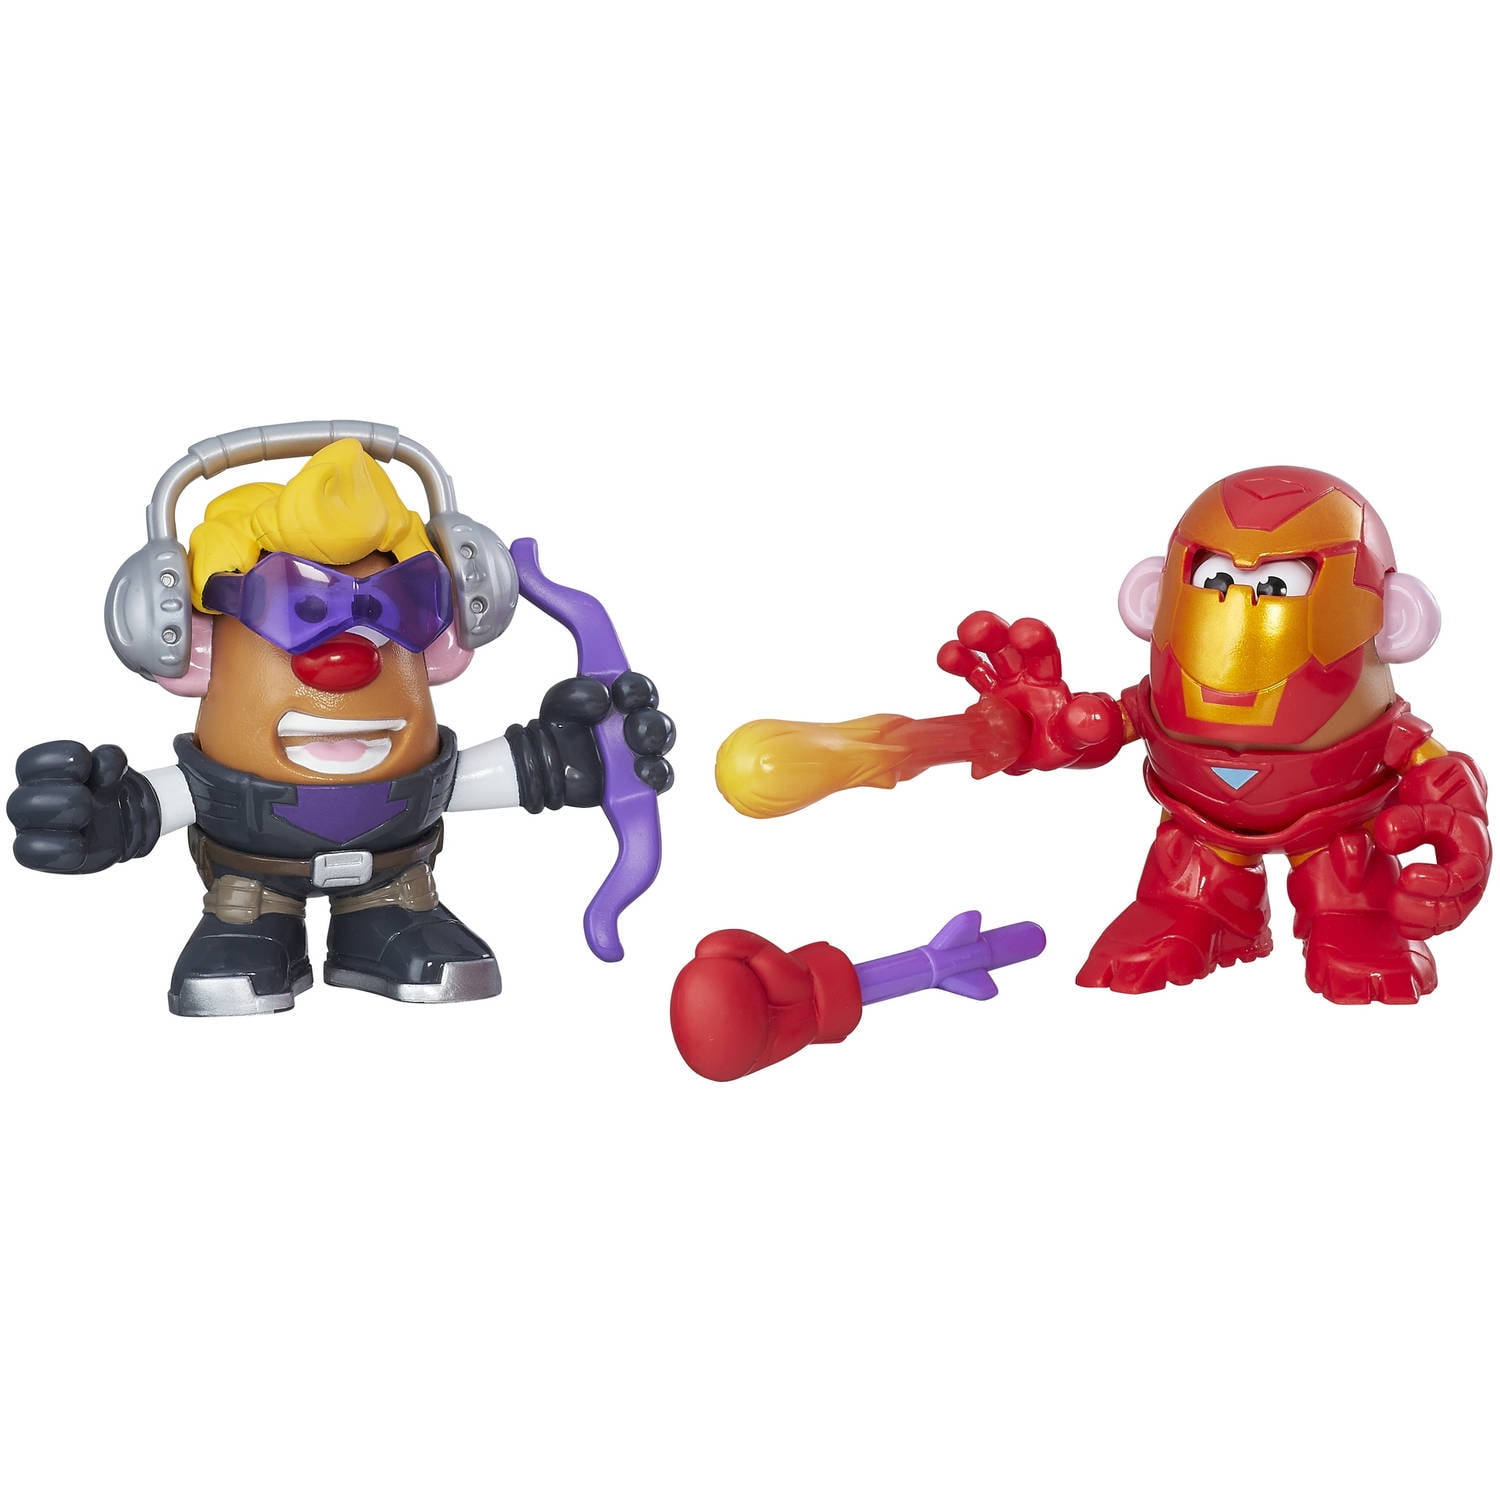 for sale online Playskool Mr Potato Head as Iron Man & Hawkeye Figures B9307 